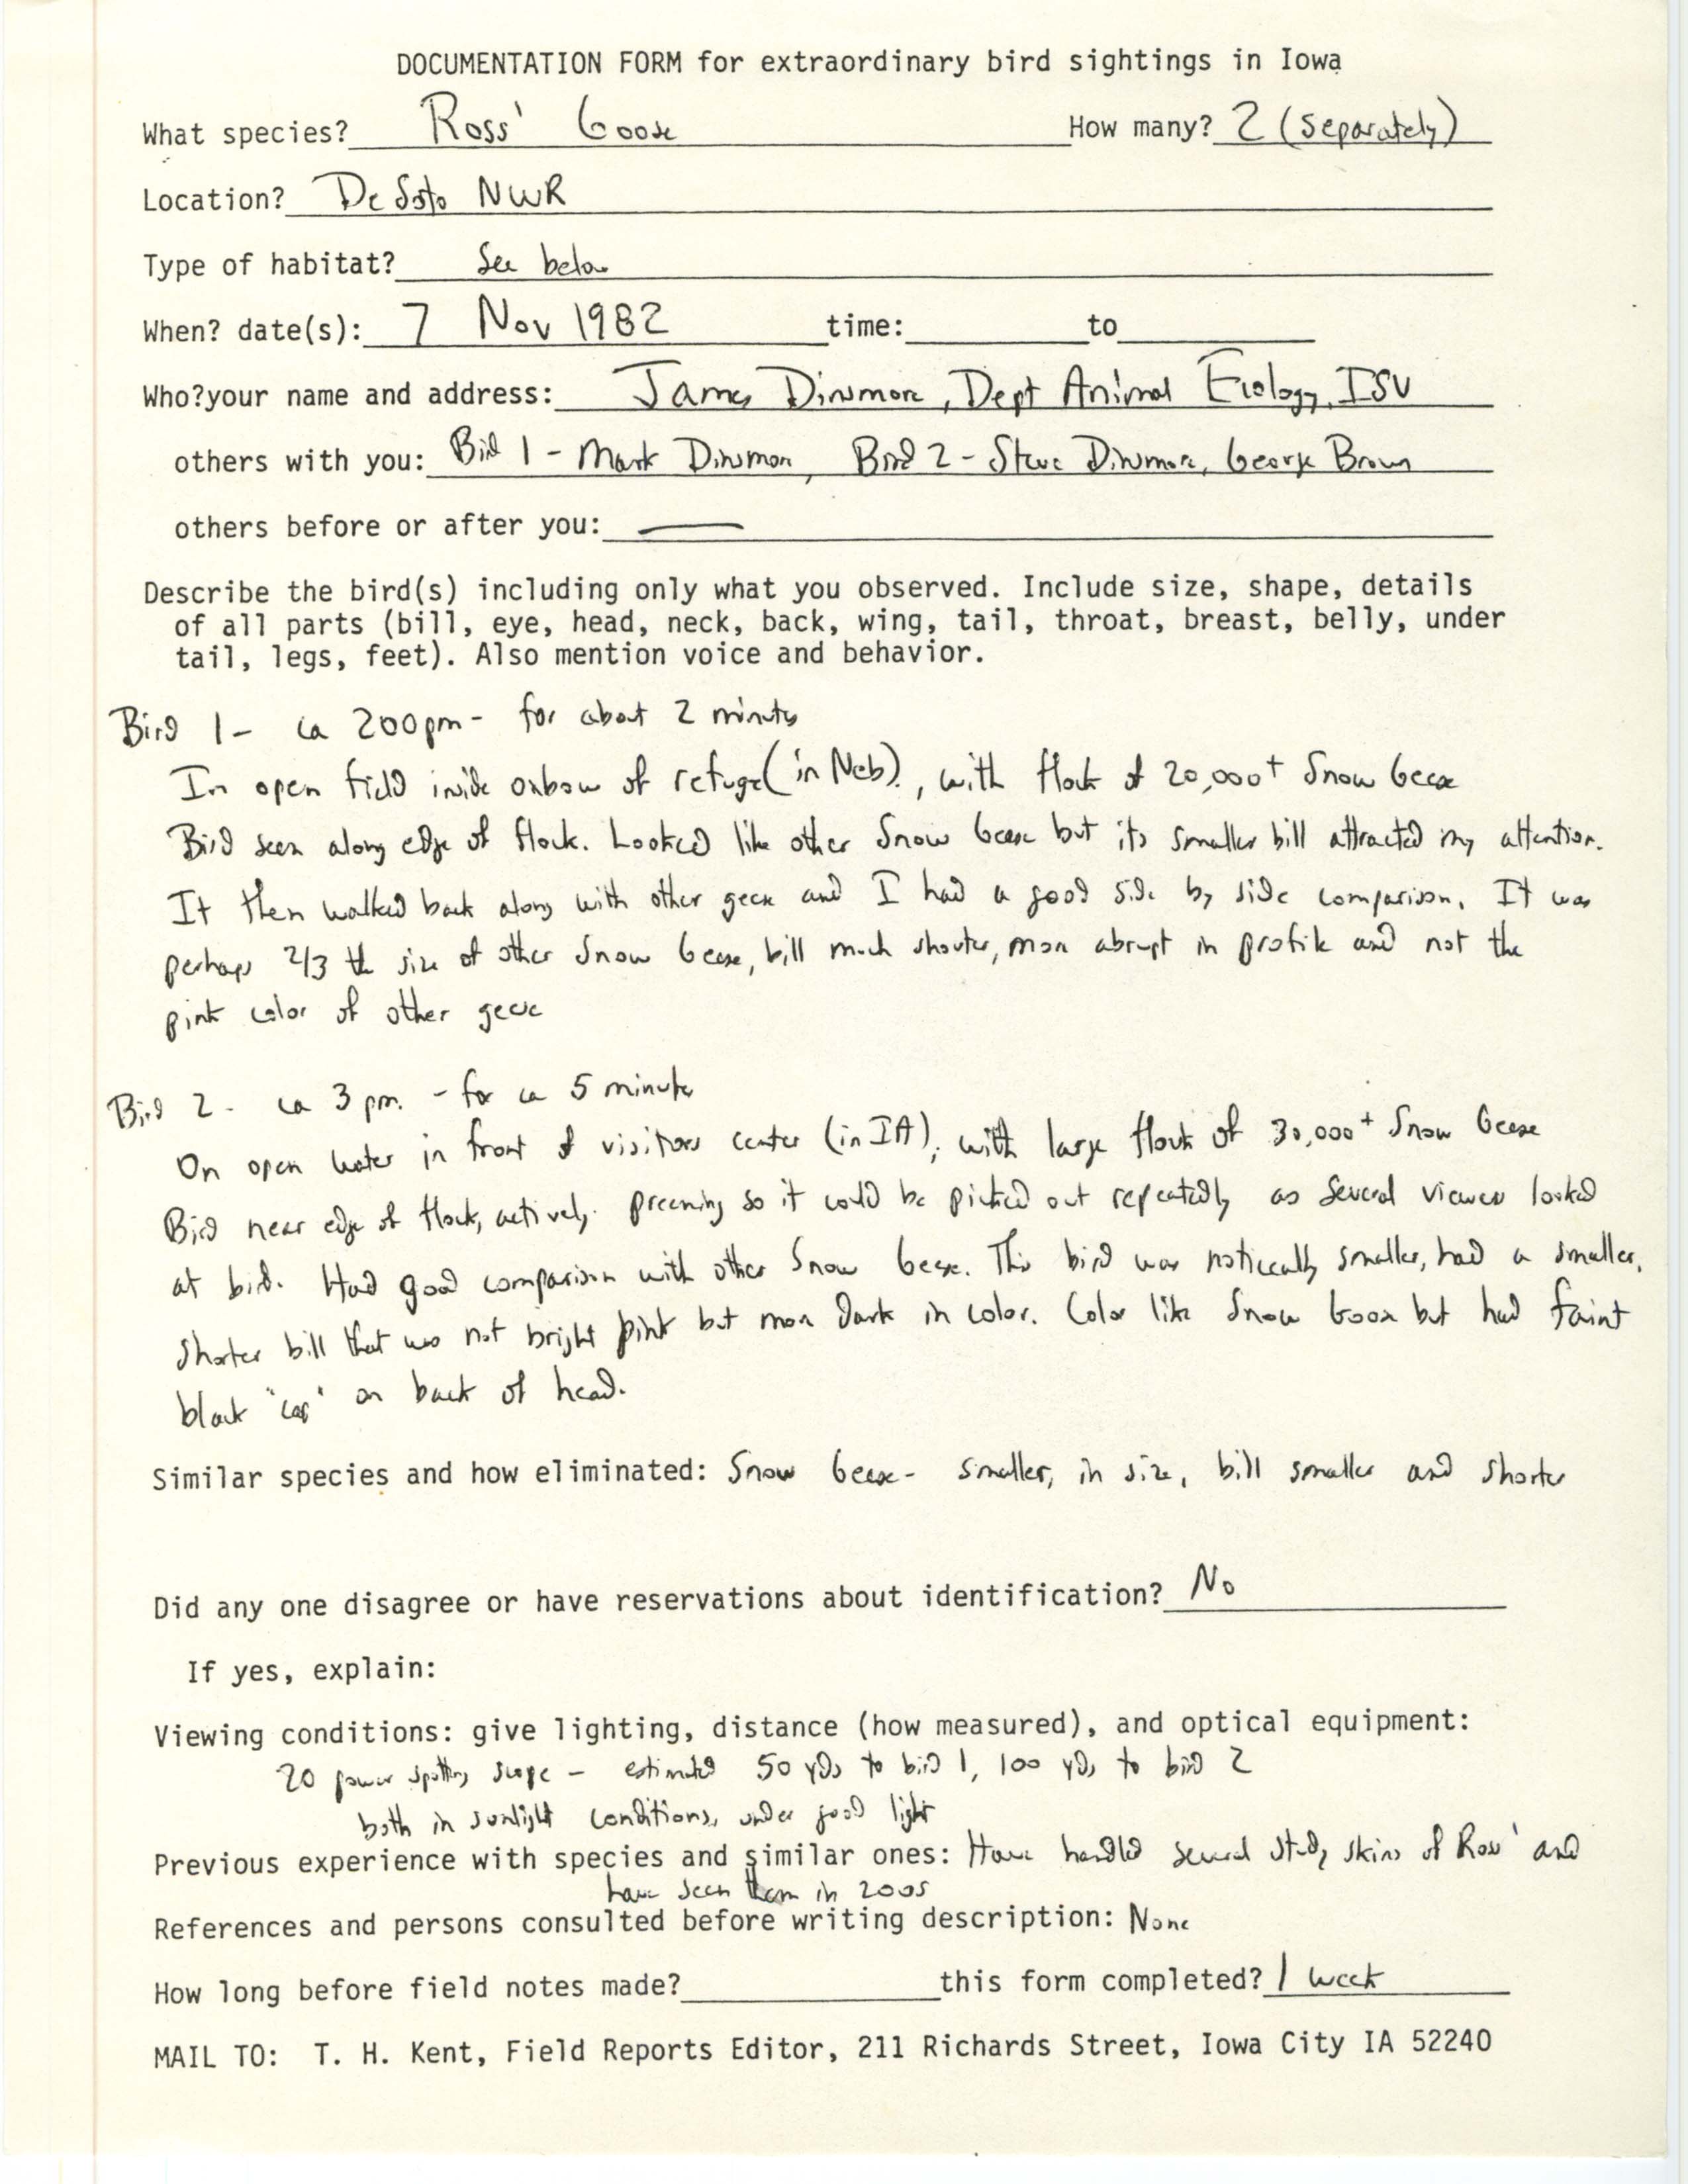 Rare bird documentation form for Ross' Goose at DeSoto National Wildlife Refuge, 1982